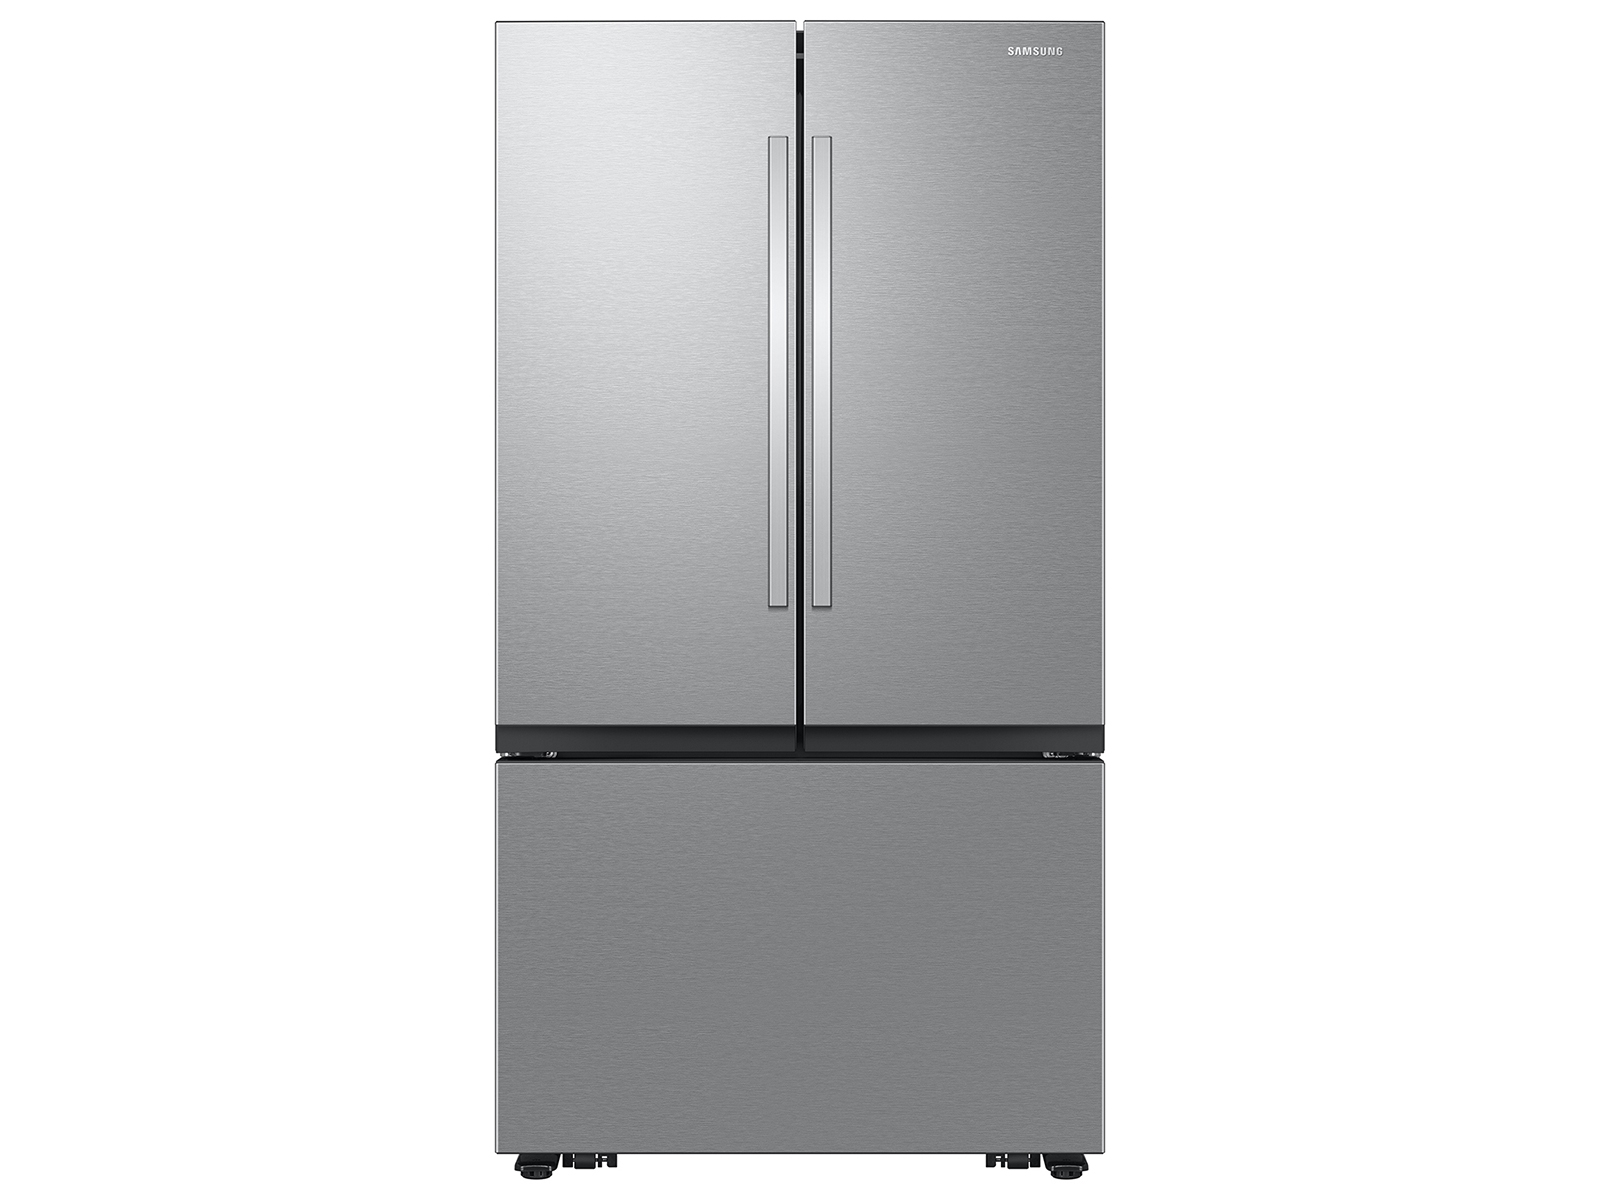 samsung stainless steel fridge